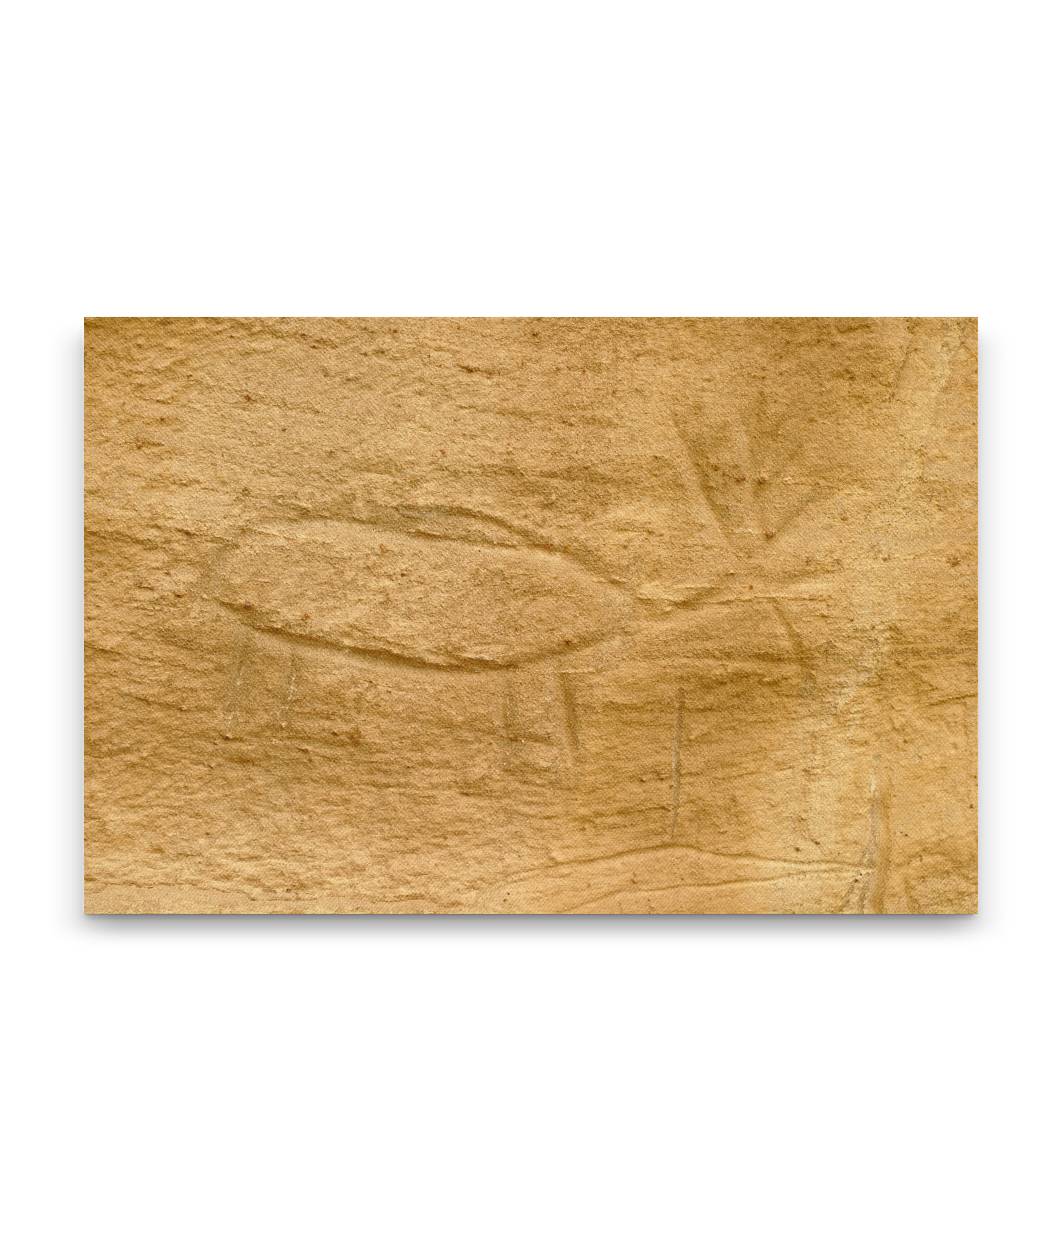 Native American Petroglyph, White Mountain Petroglyphs, Wyoming